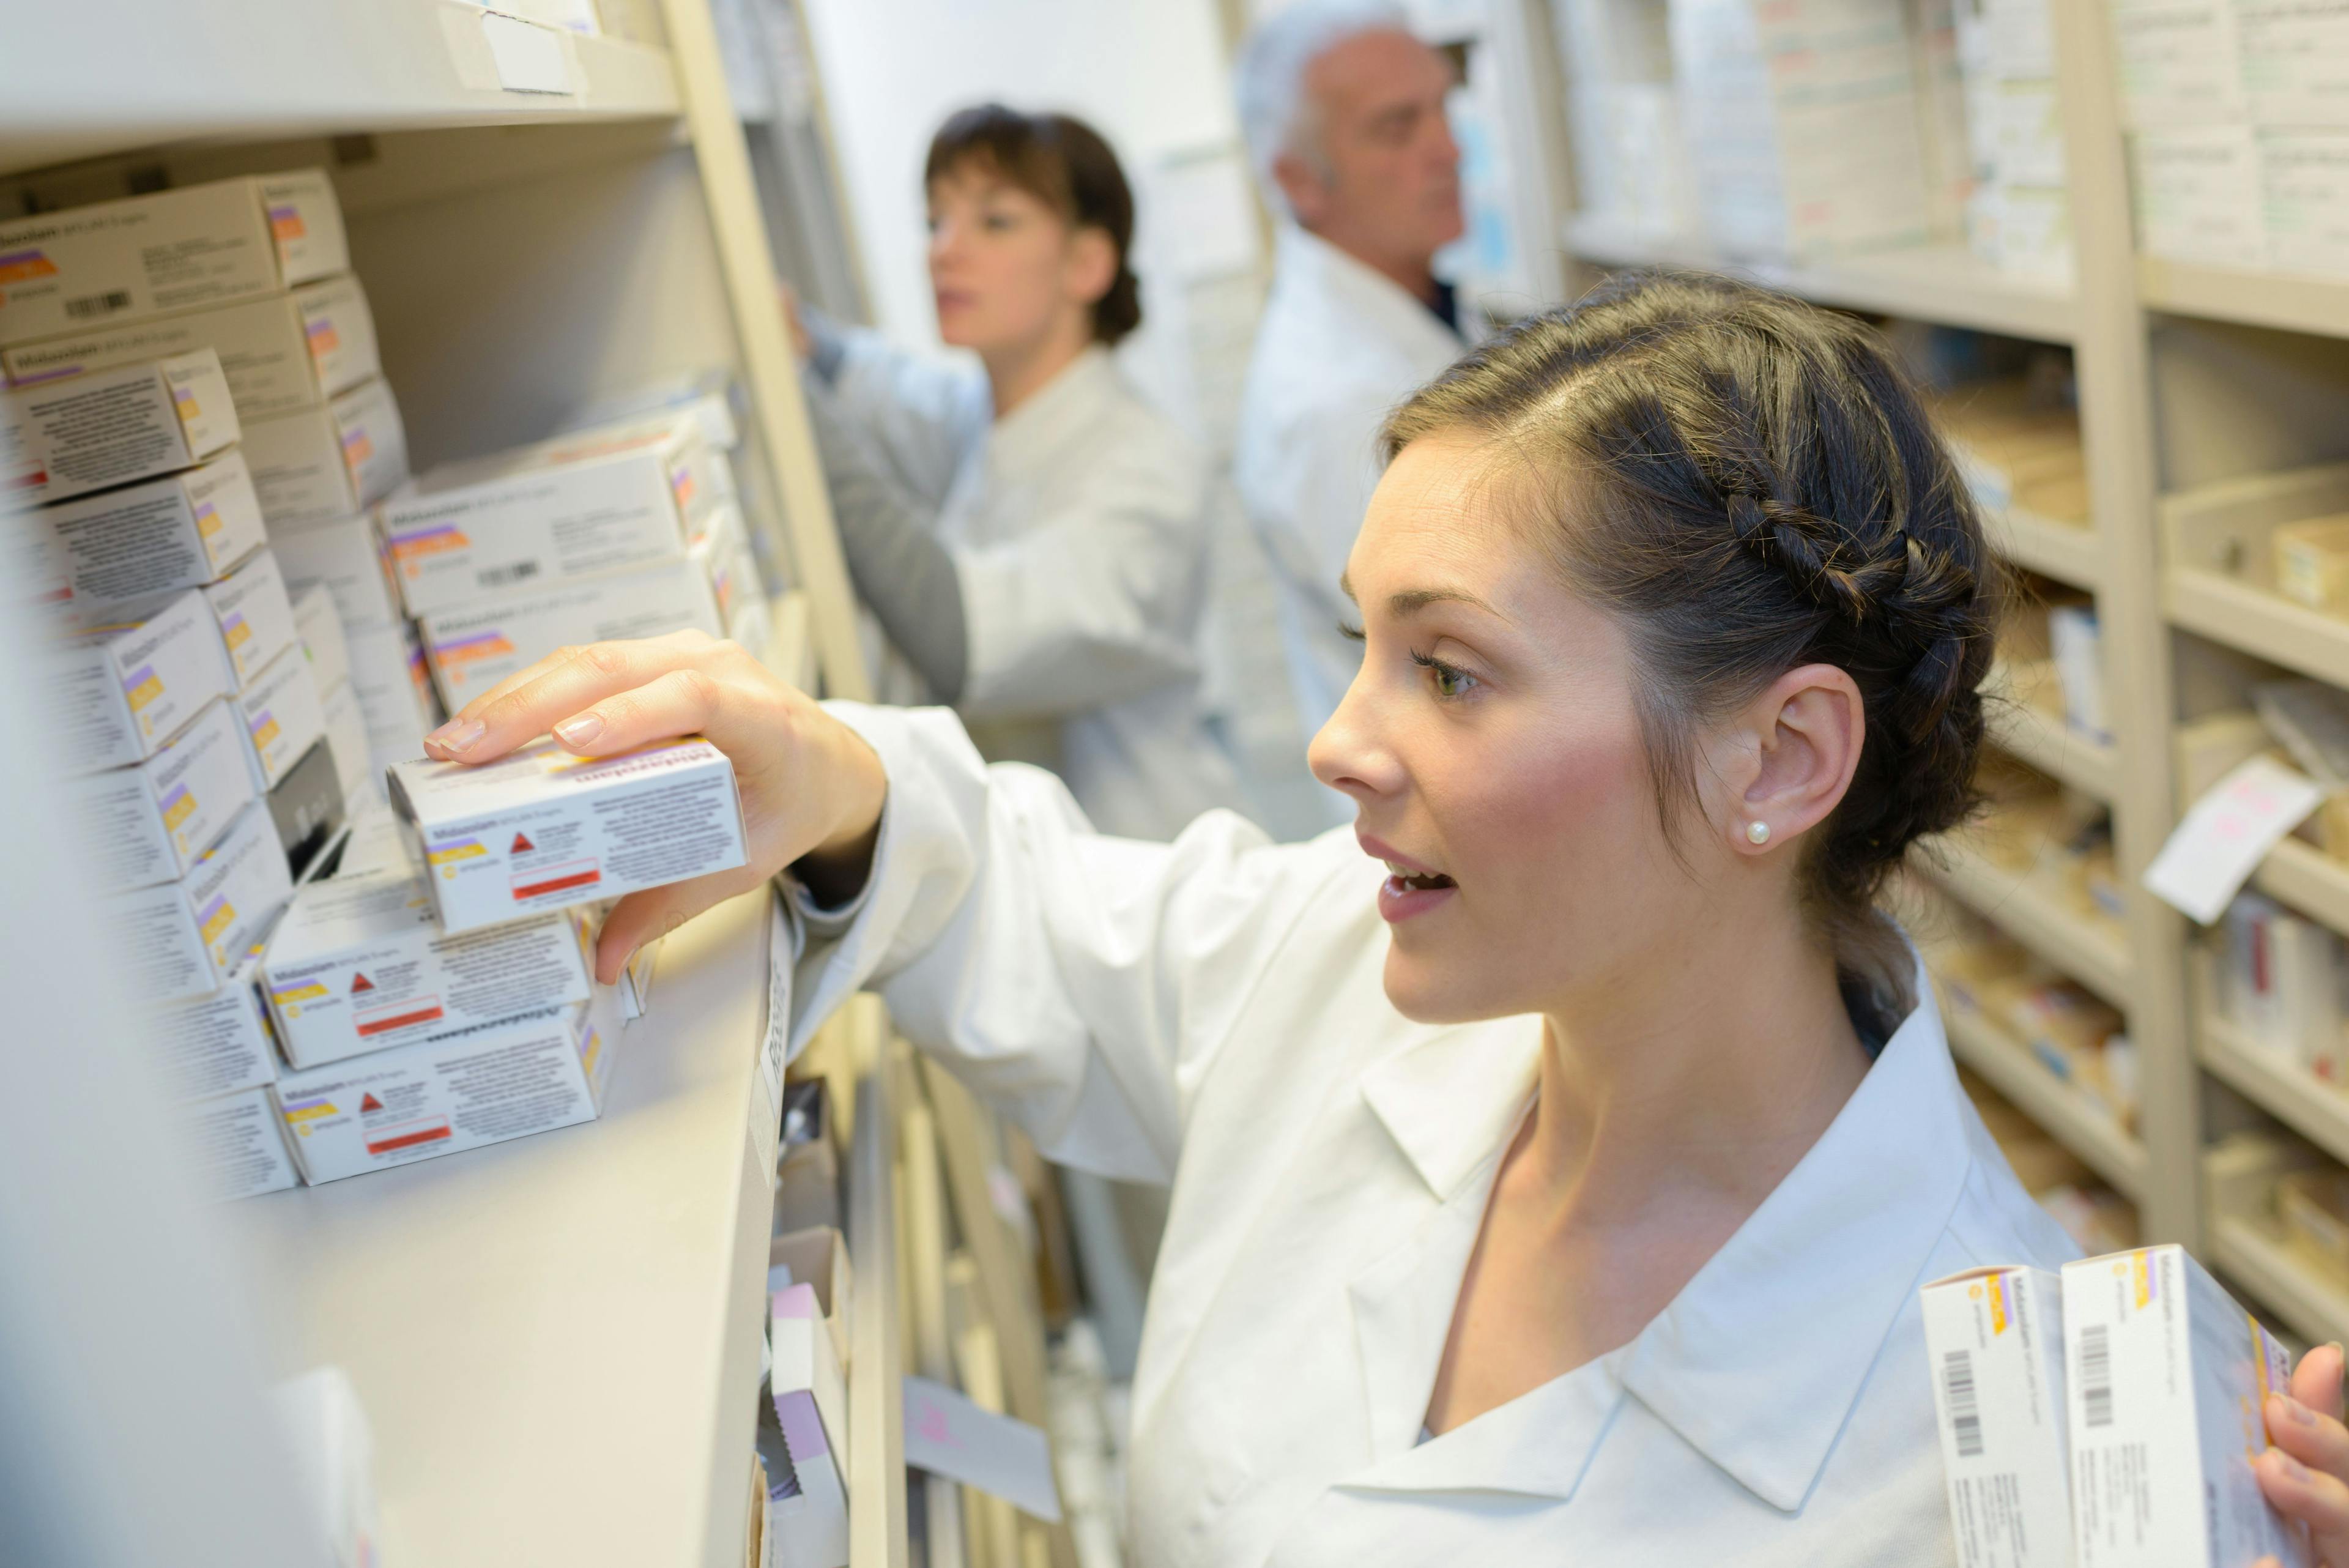 Pharmacy technician helping around pharmacy | Image Credit: auremar - stock.adobe.com